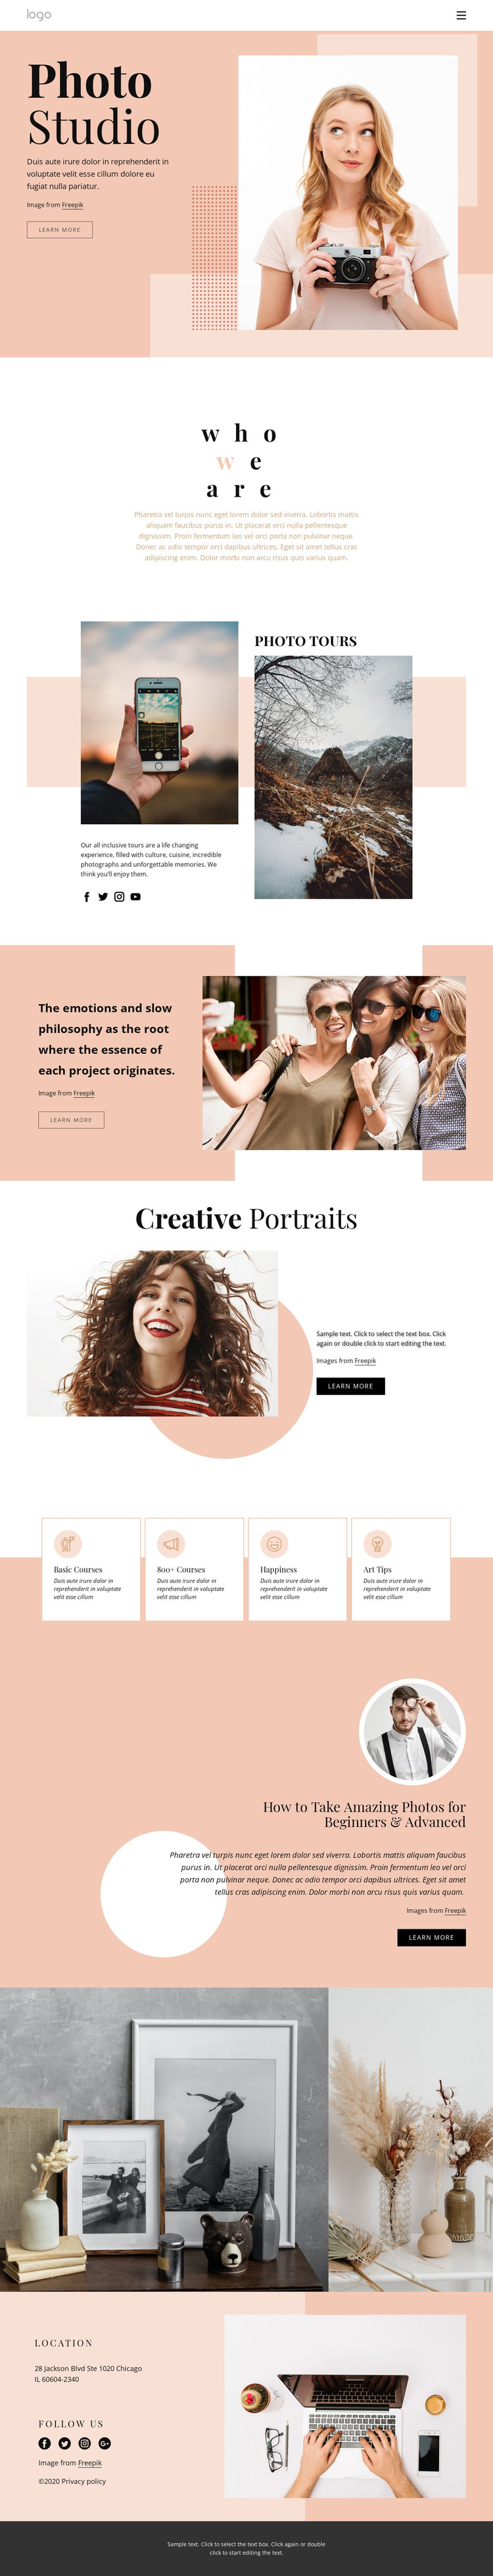 Photography courses Web Design